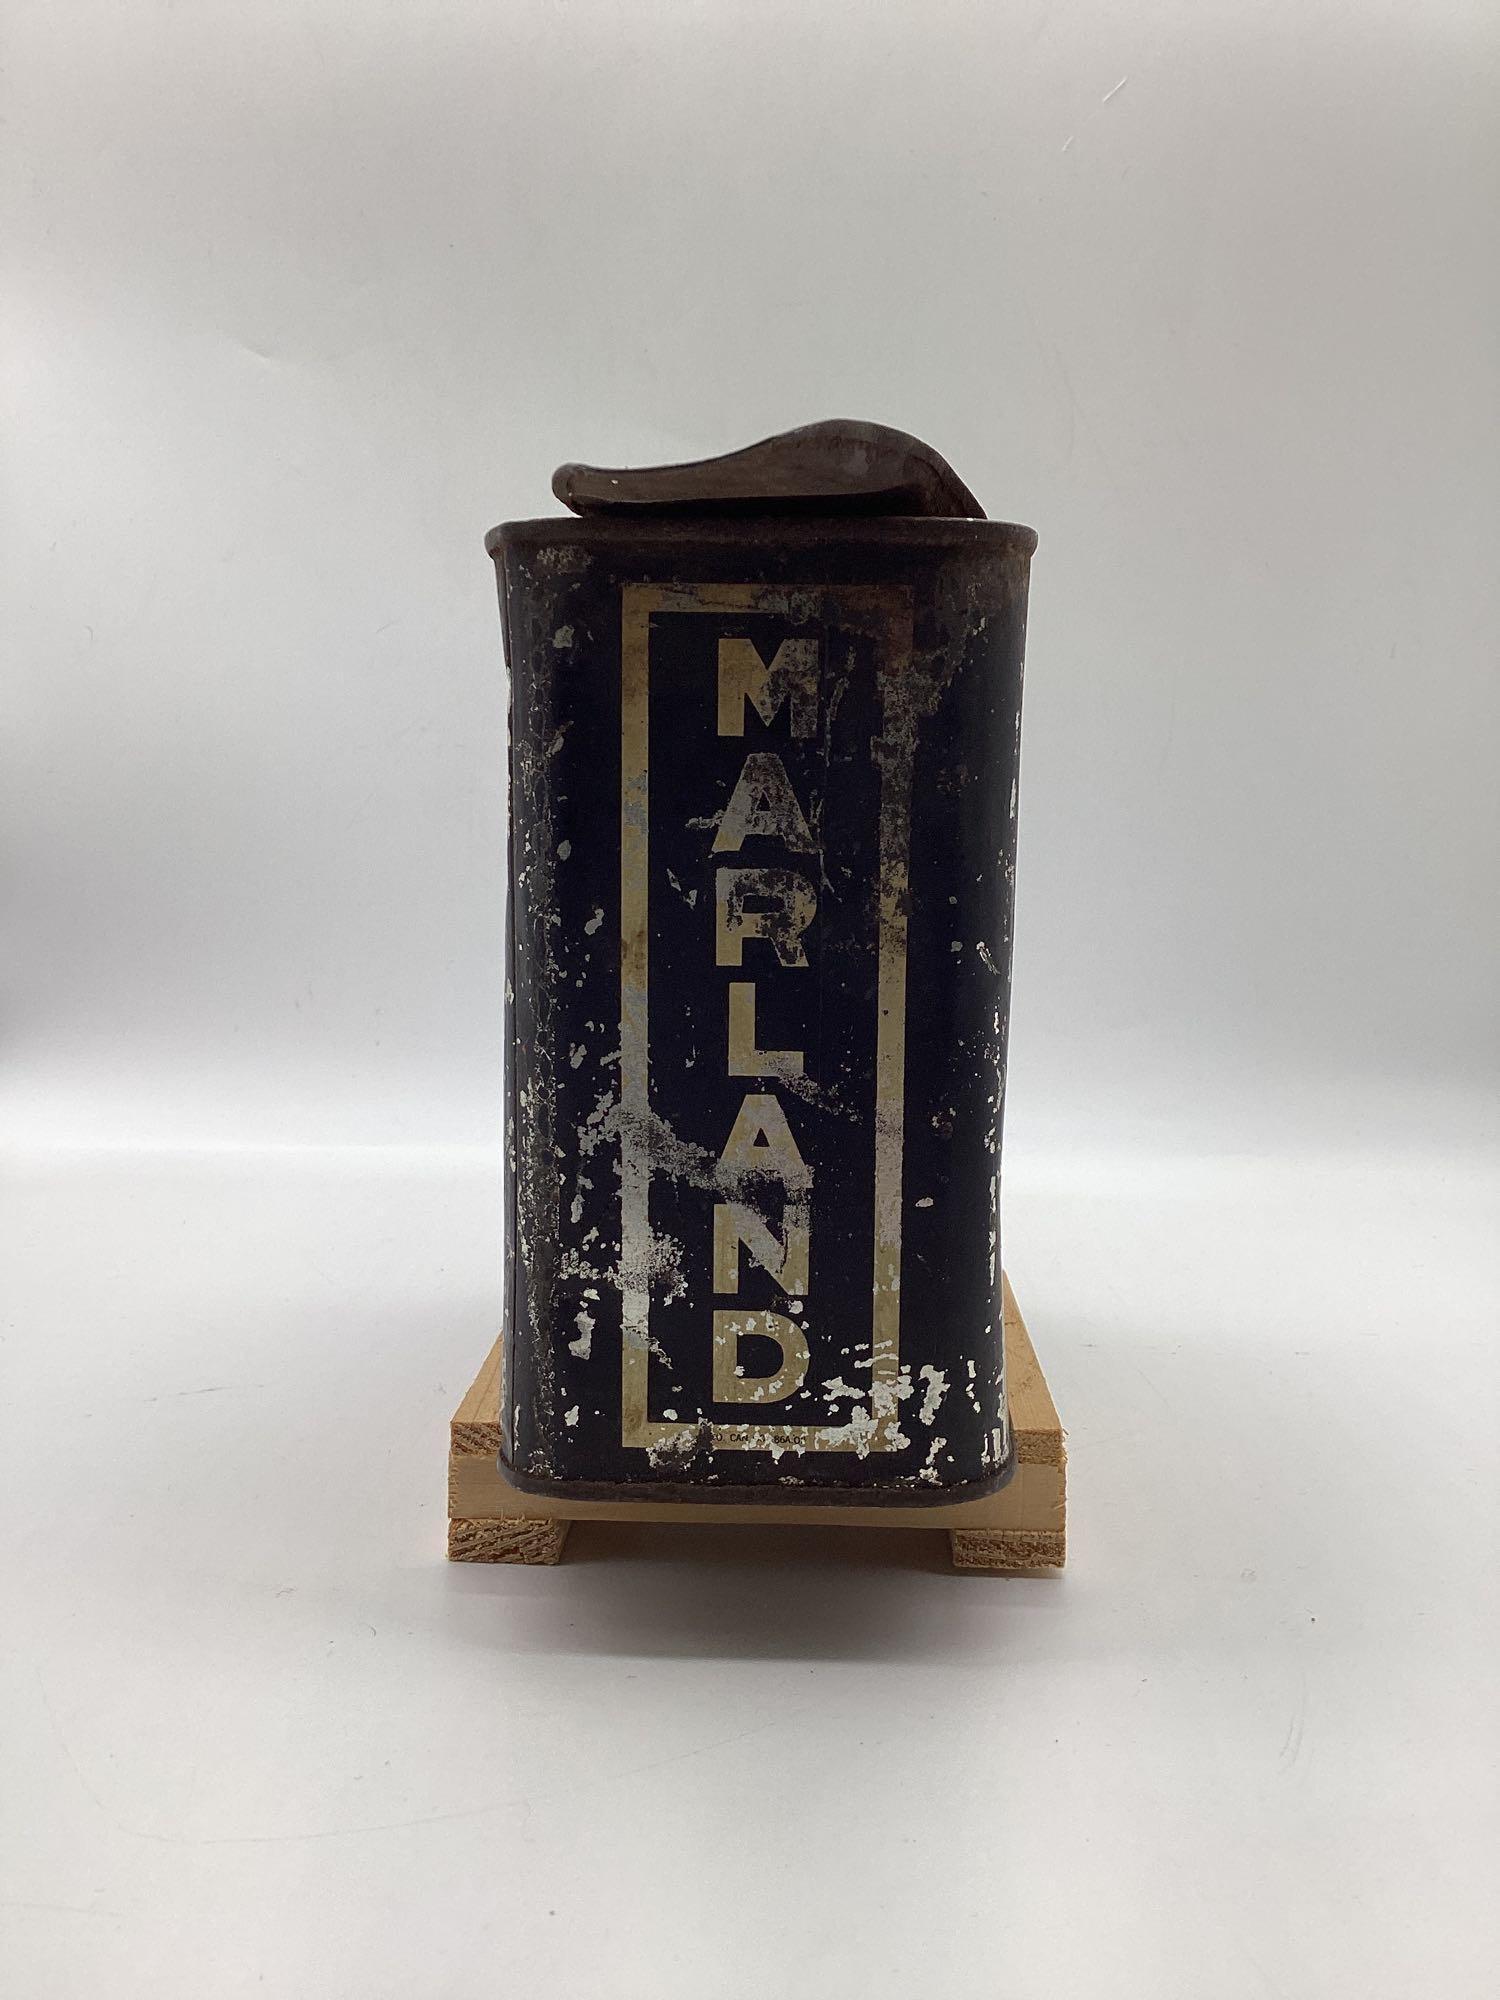 1920's Marland 1/2 Gallon Oil Can Ponca City, Oklahoma